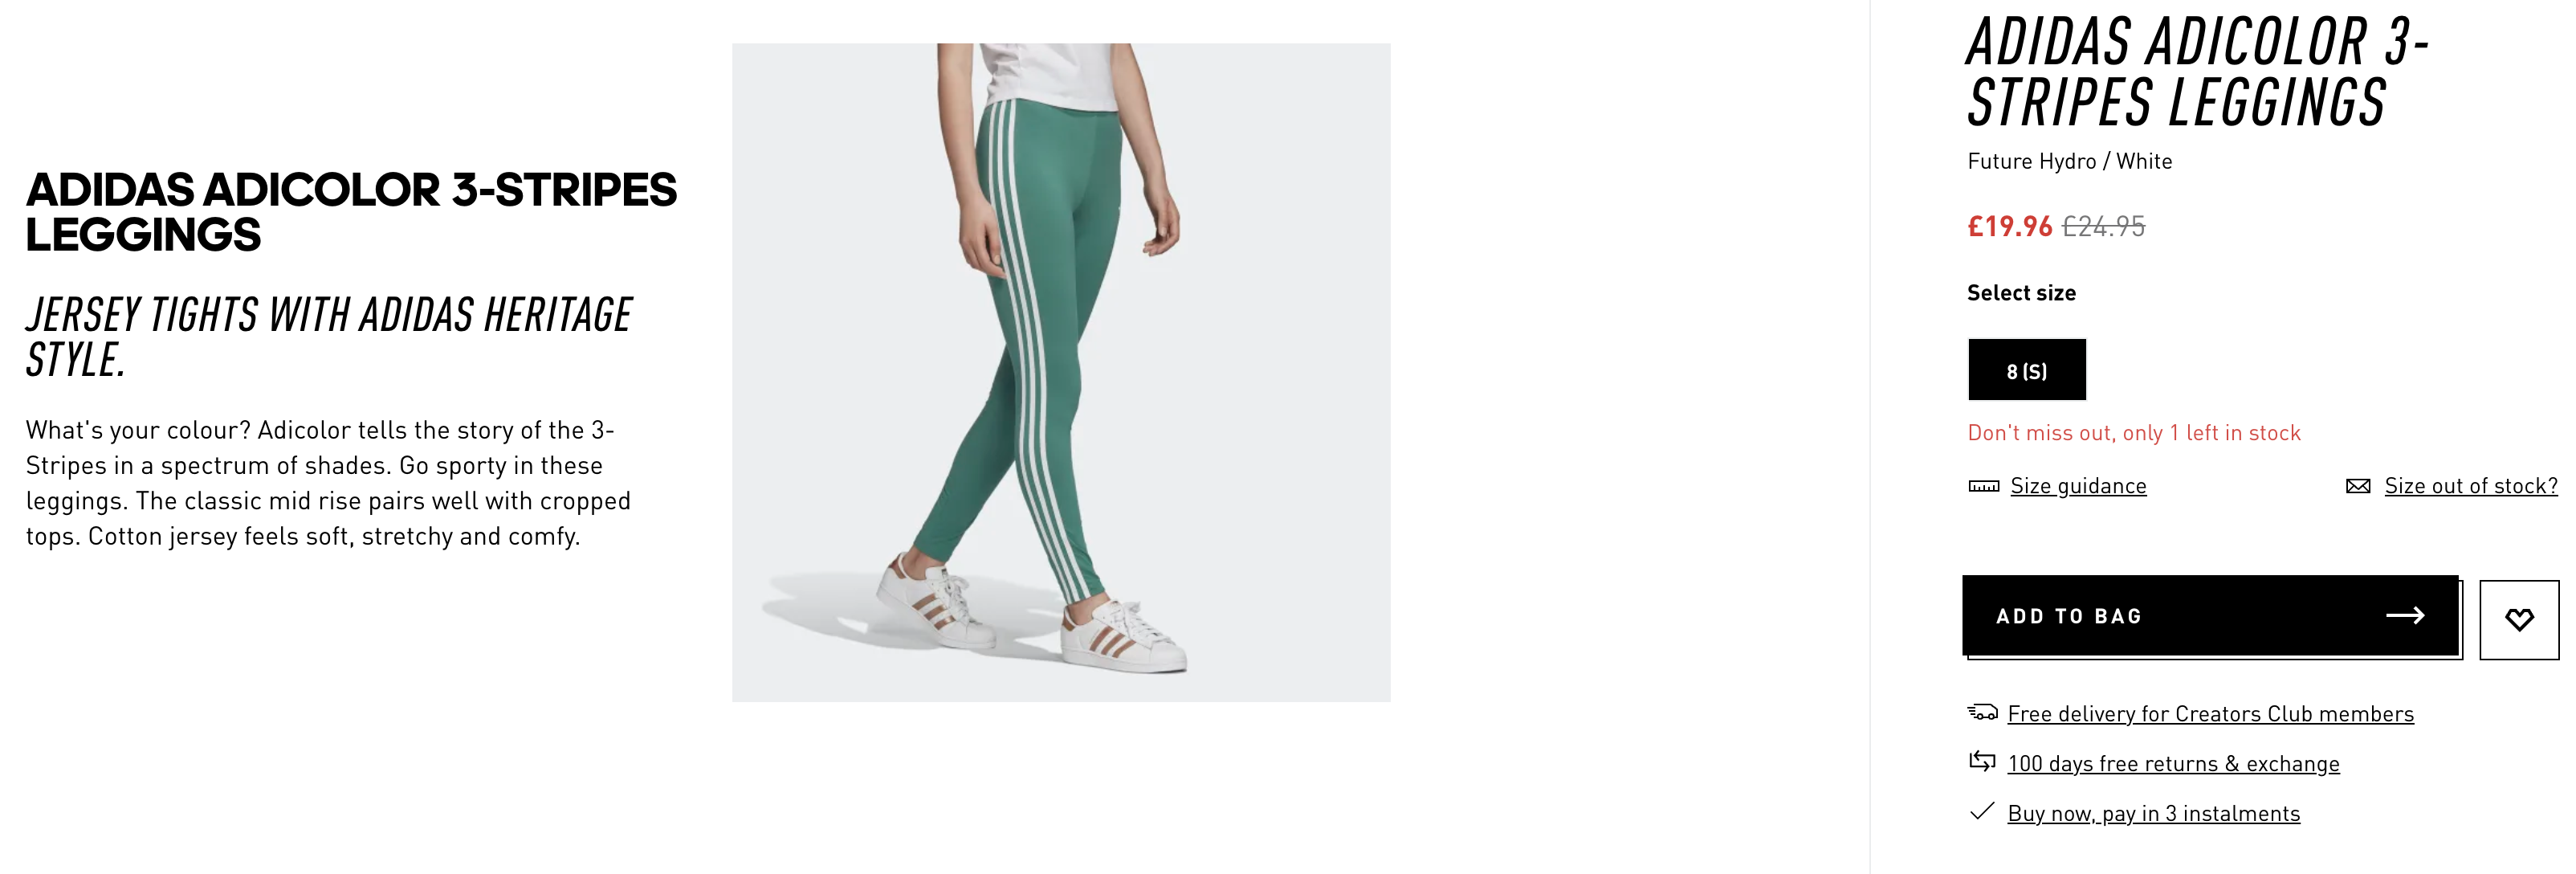 Adidas leggings product description